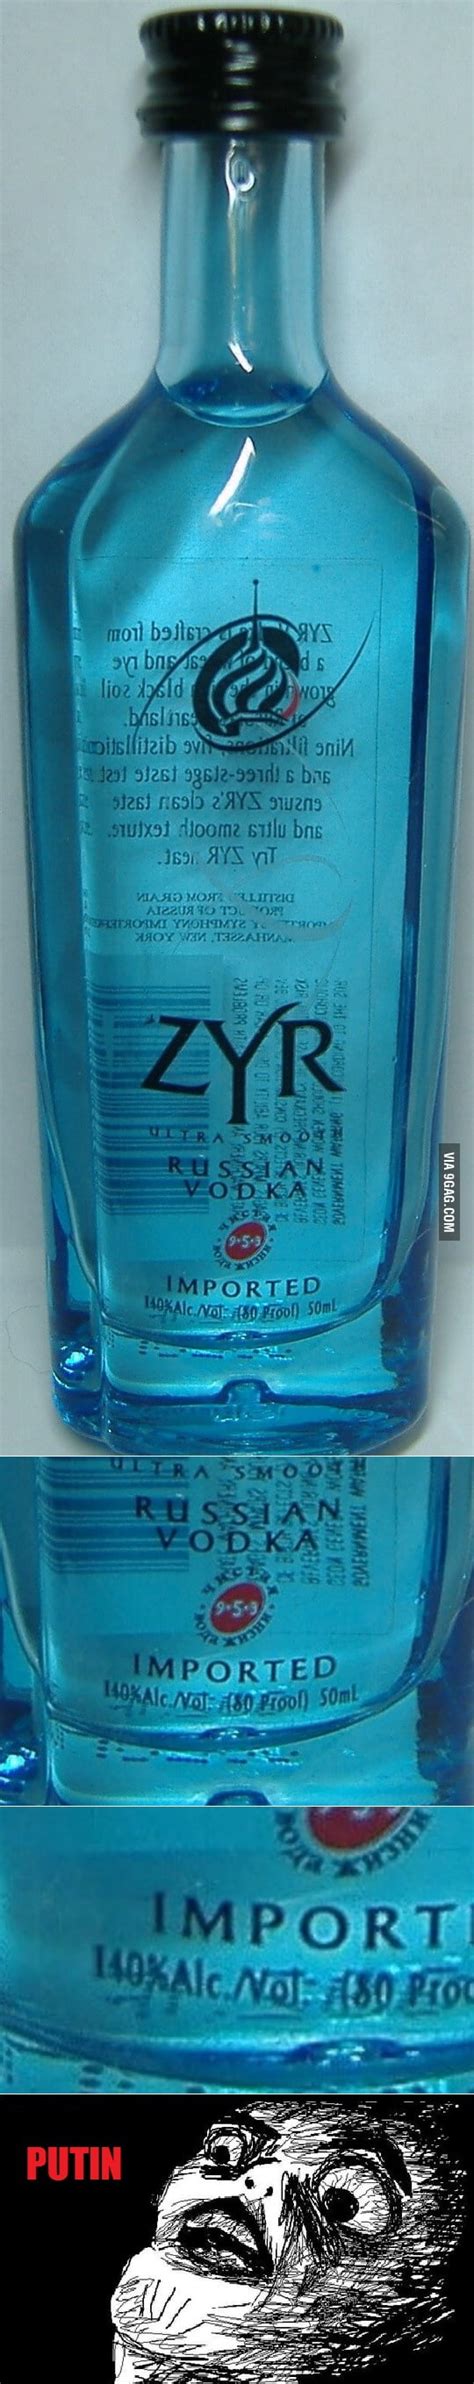 Just Russian Vodka 9gag